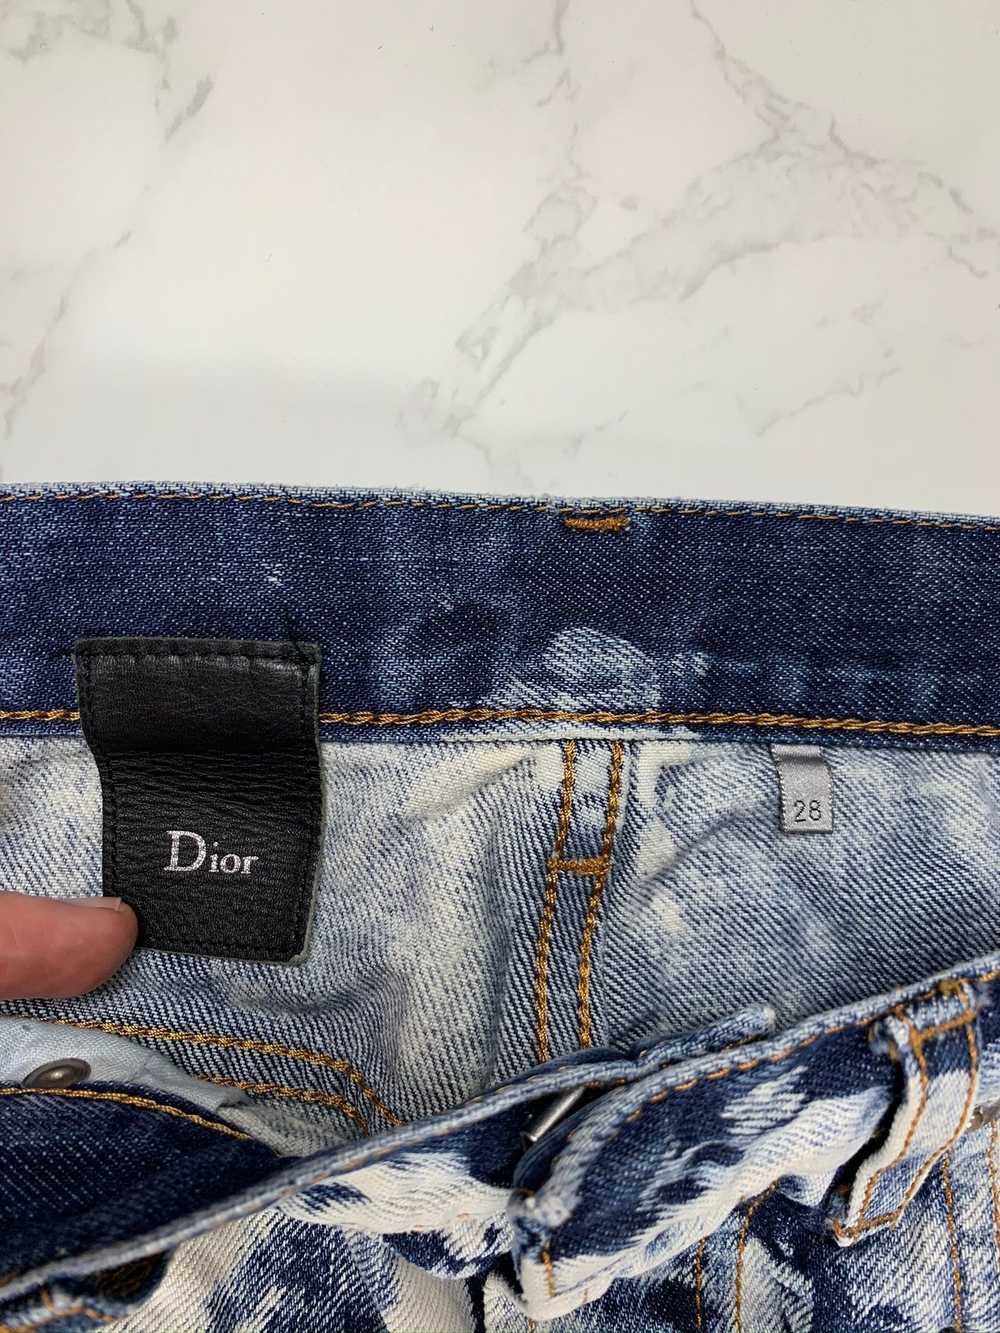 Dior Dior Painted Denim Jeans - image 9